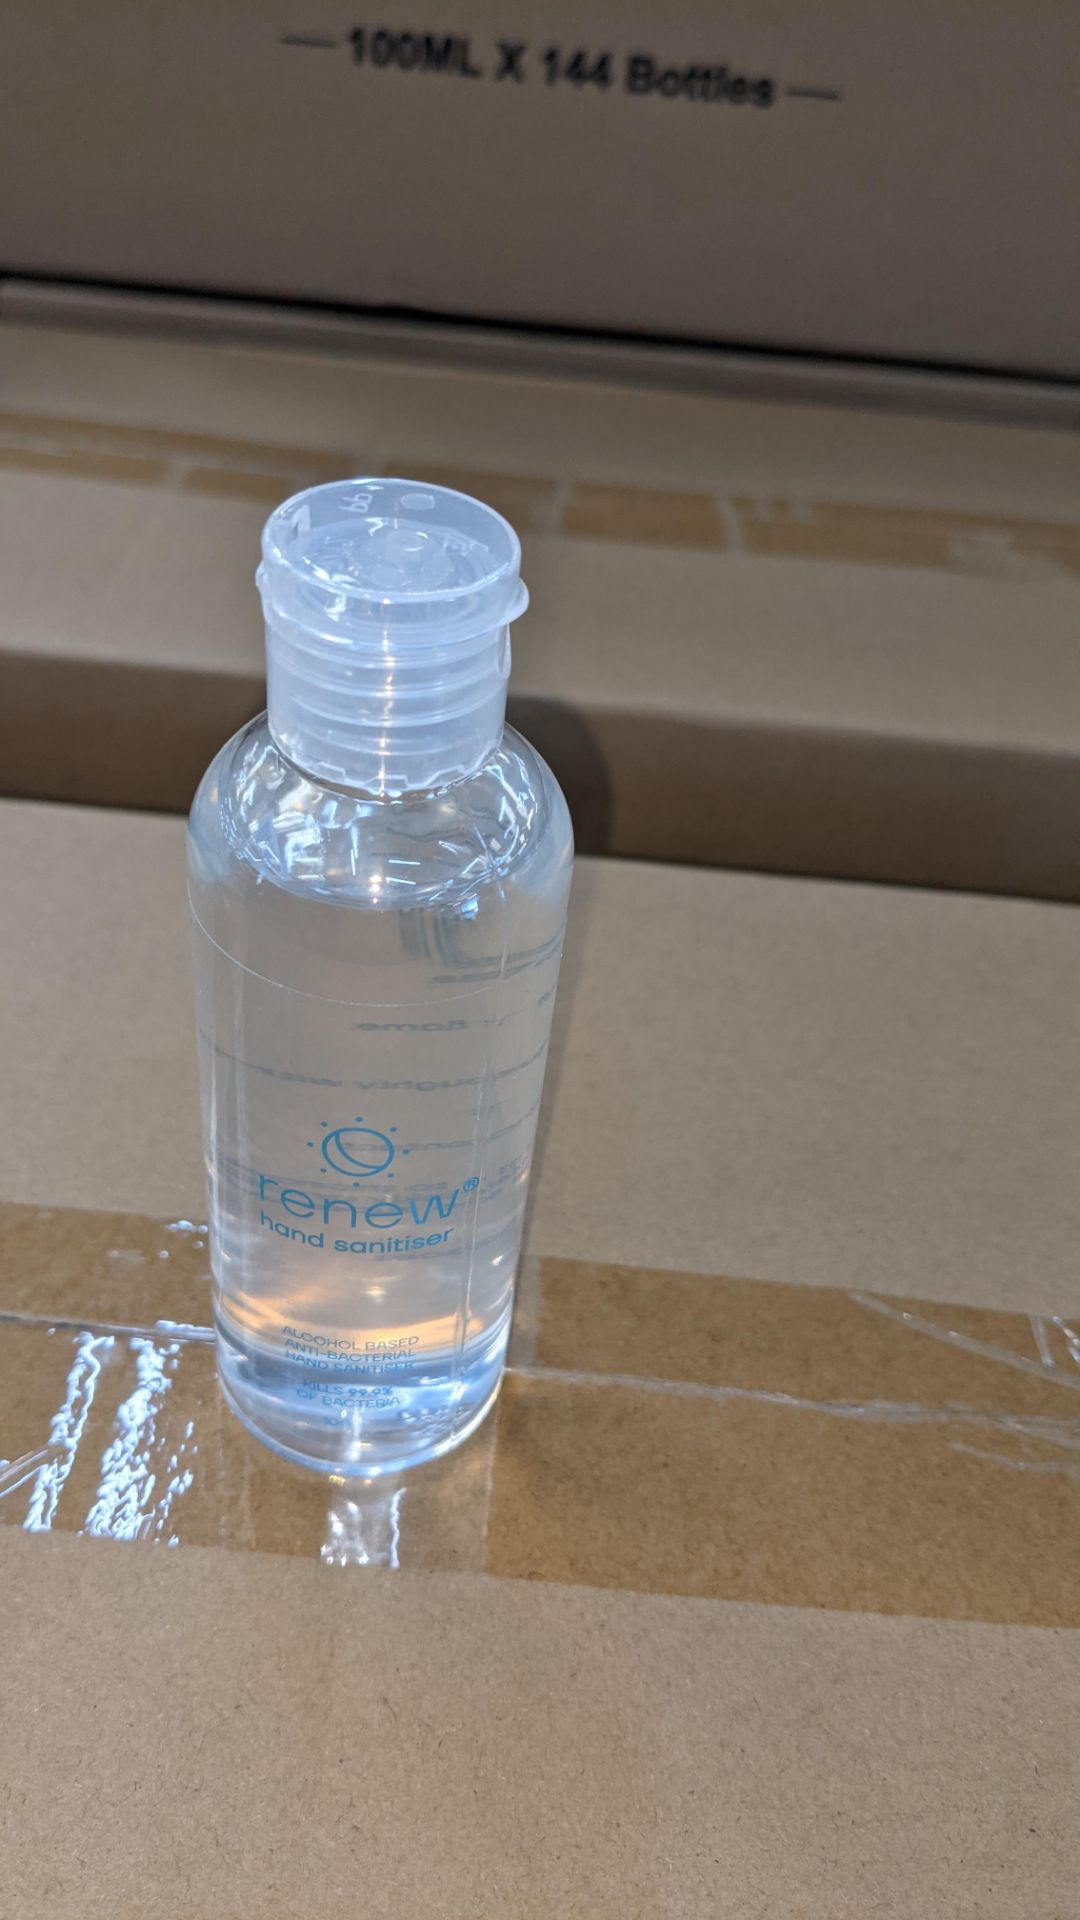 1,440 off 100ml bottles of Renew Hand Sanitiser waterless gel. Alcohol based (75% ethanol), Aloe ext - Image 7 of 12